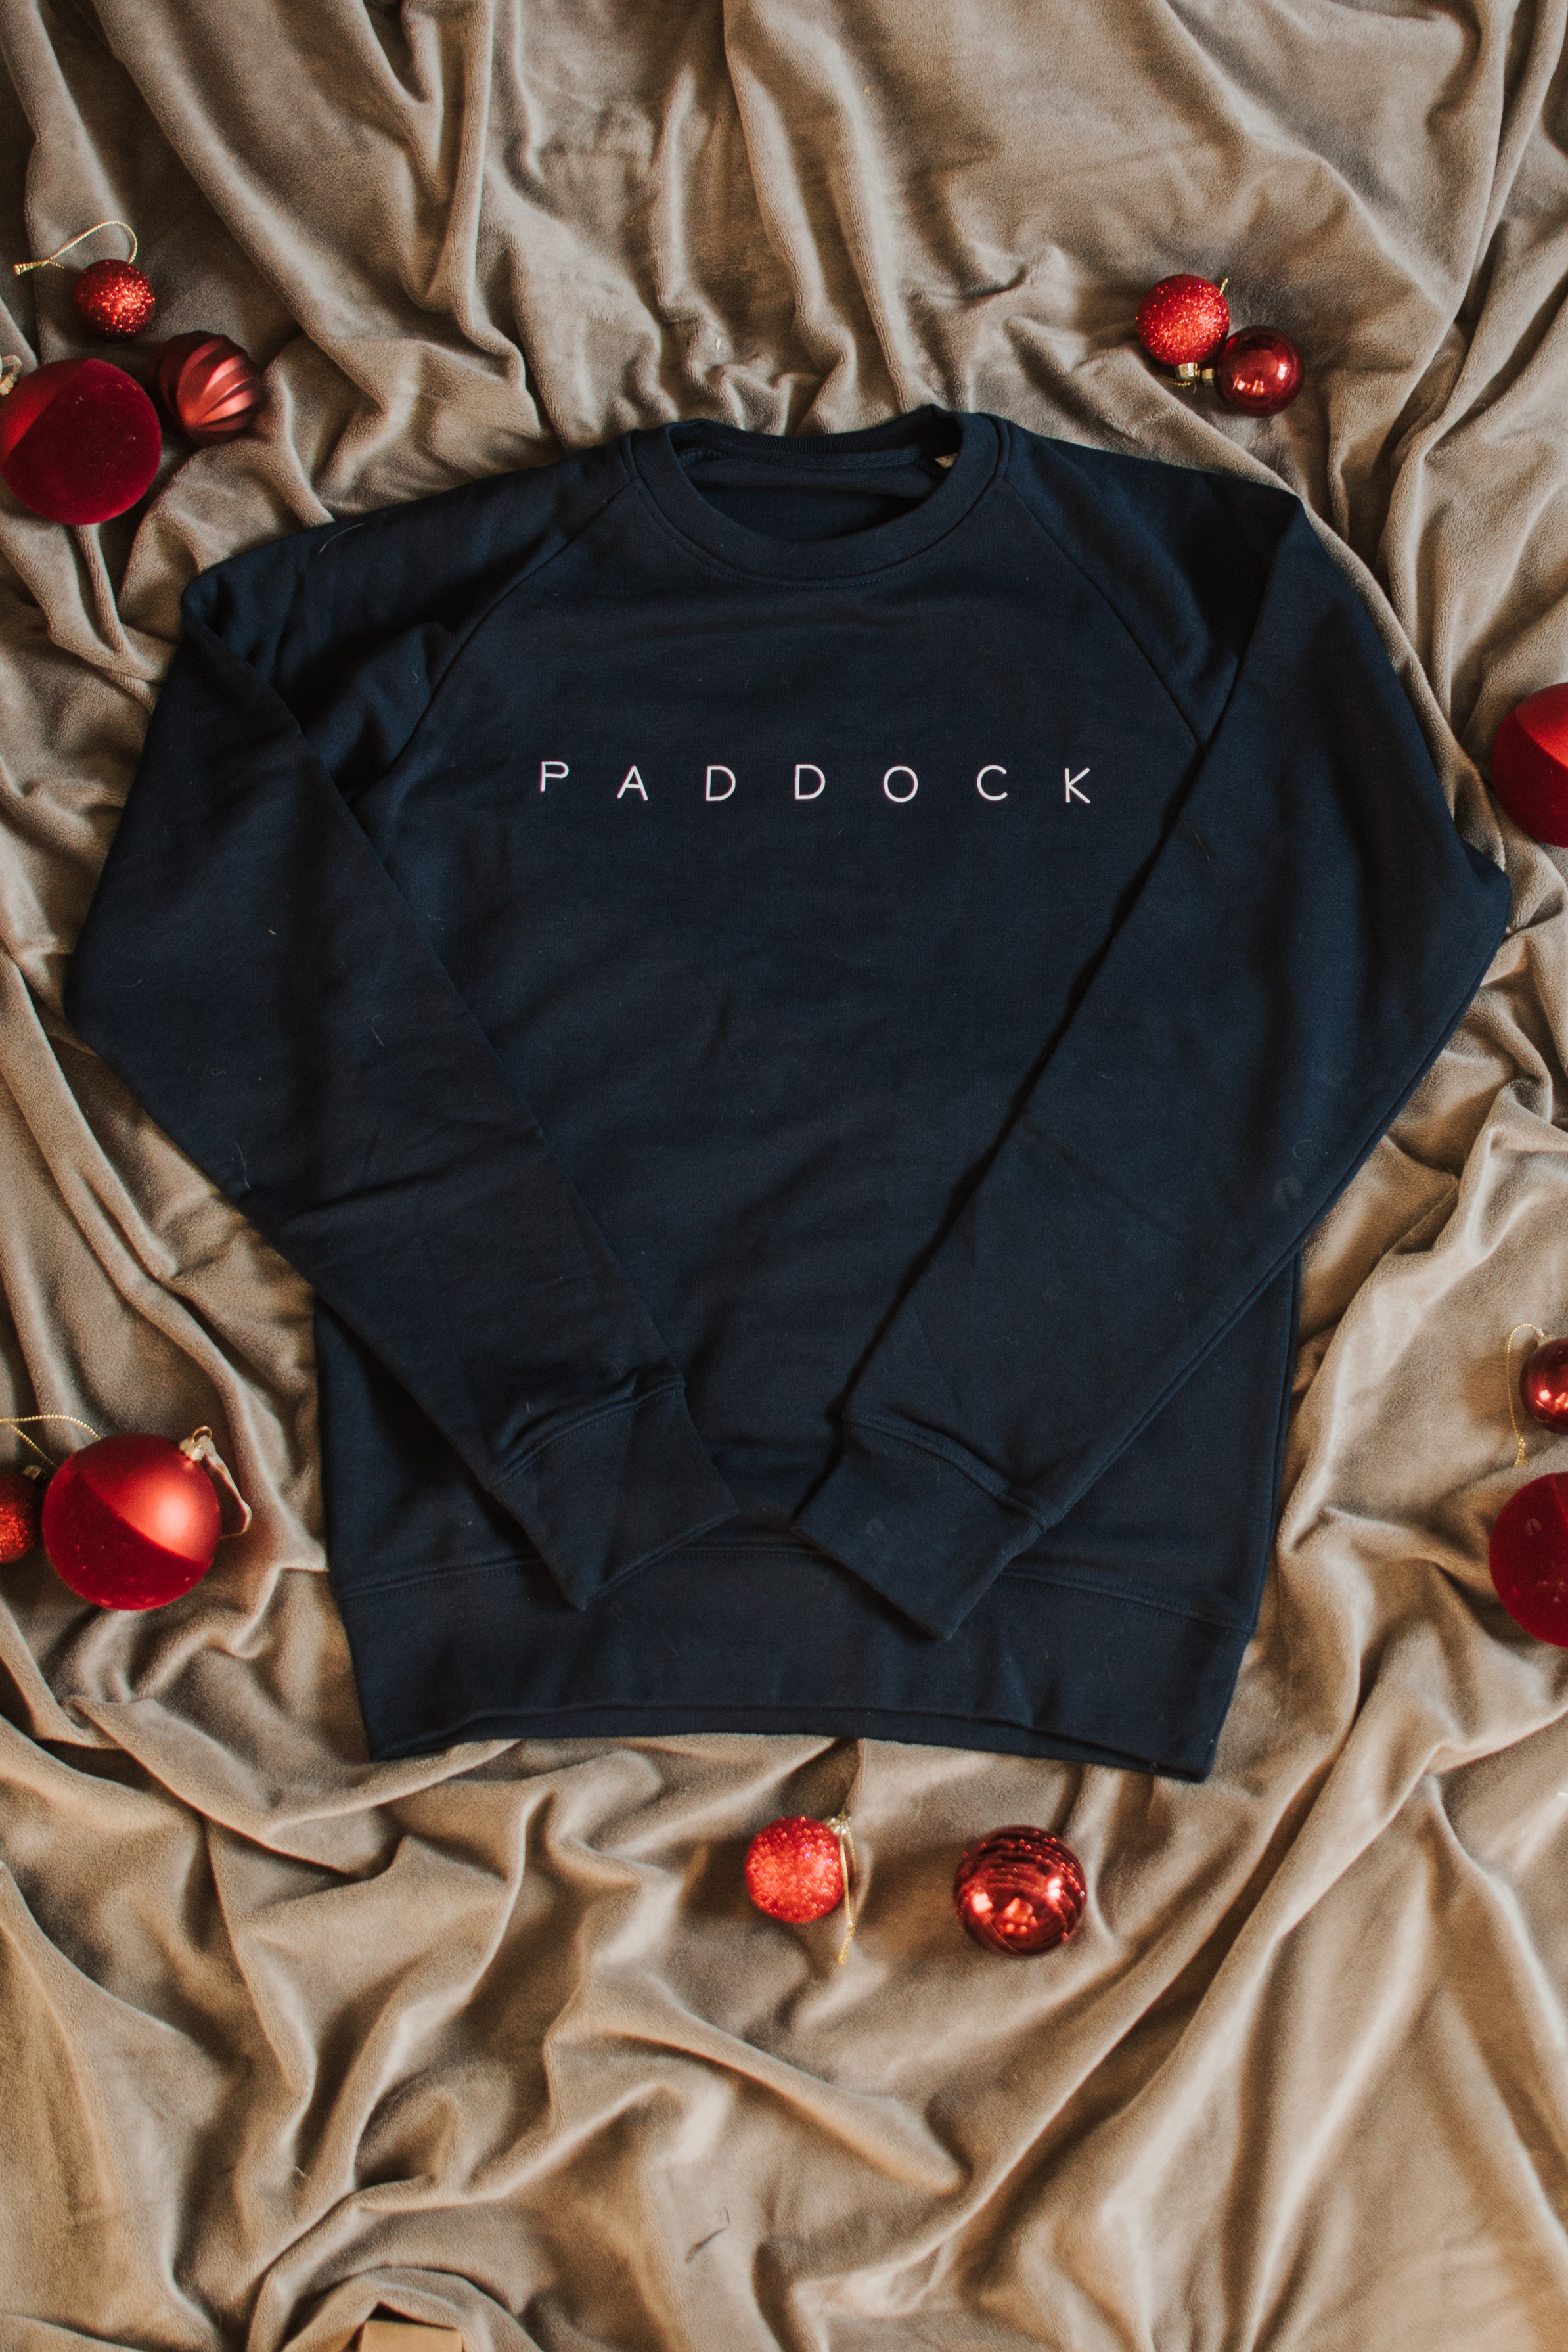 paddock apparel navy sweatshirt